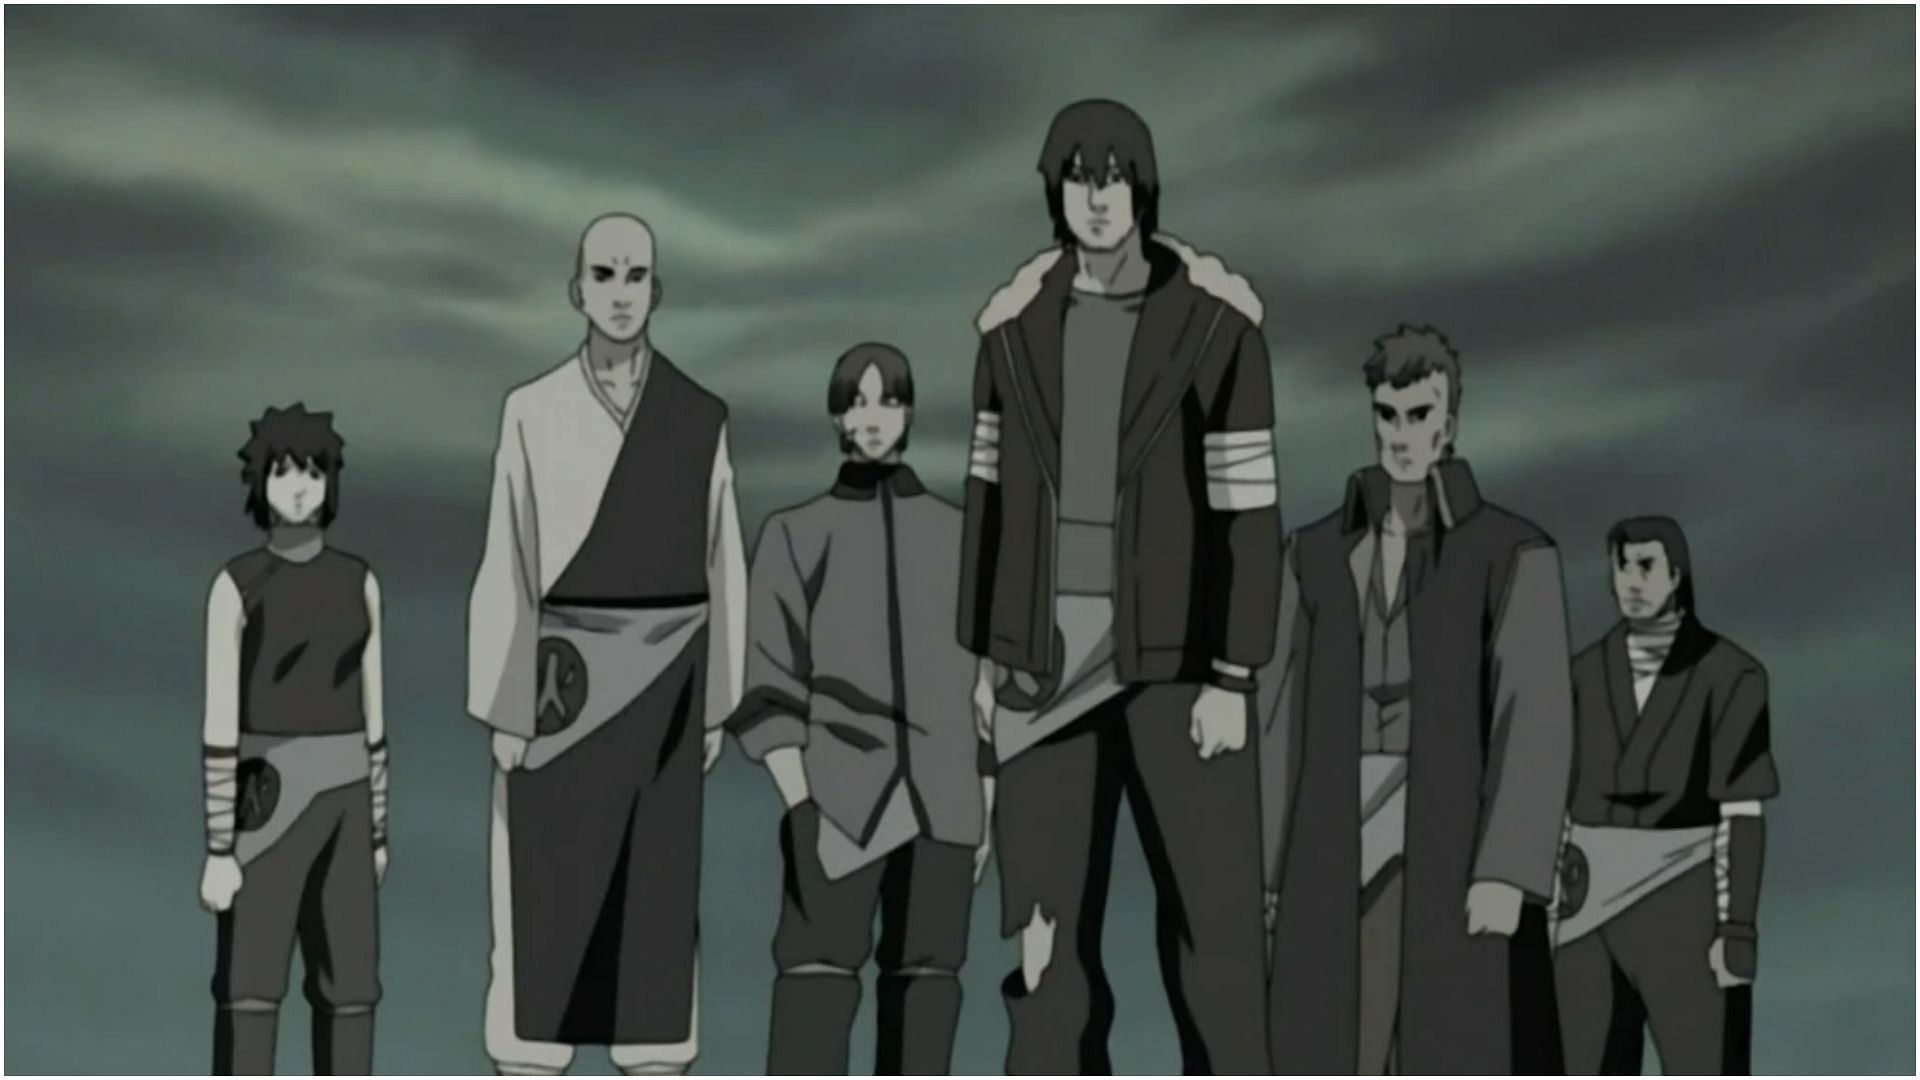 Loyal members of the Twelve Guardian Ninja in Naruto (Image credits: Masashi Kishimoto/ Viz Media/ Shueisha/ Studio Pierrot)